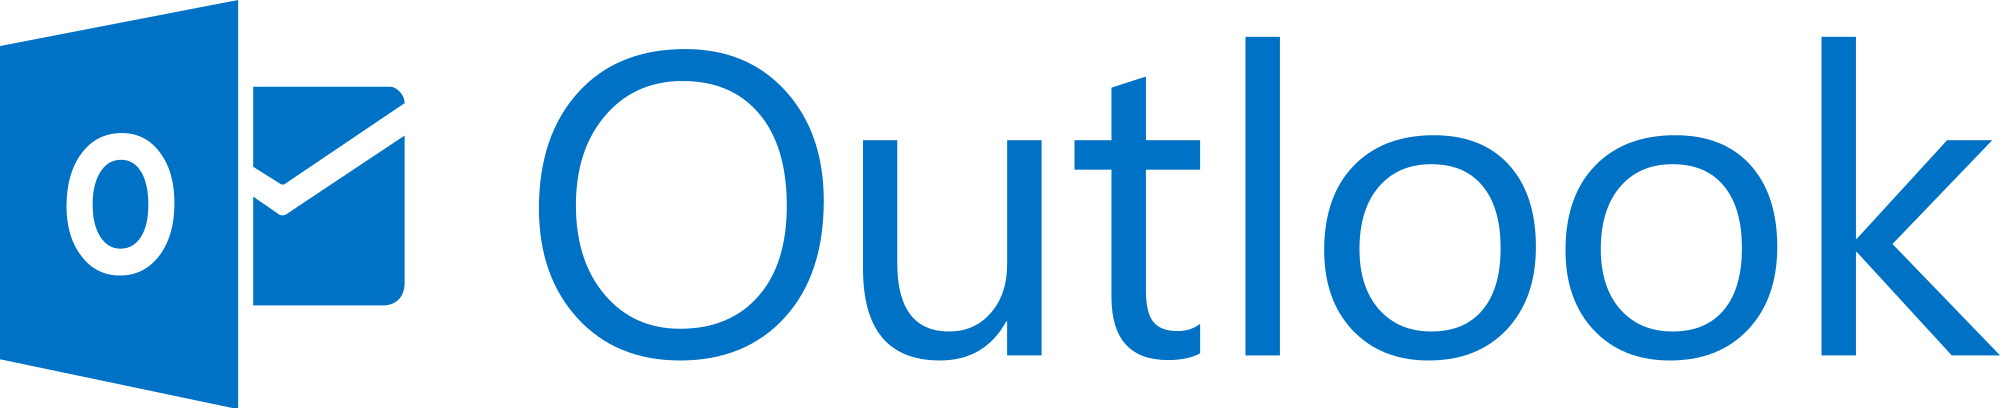 Open - Outlook Com Logo (2000x408)